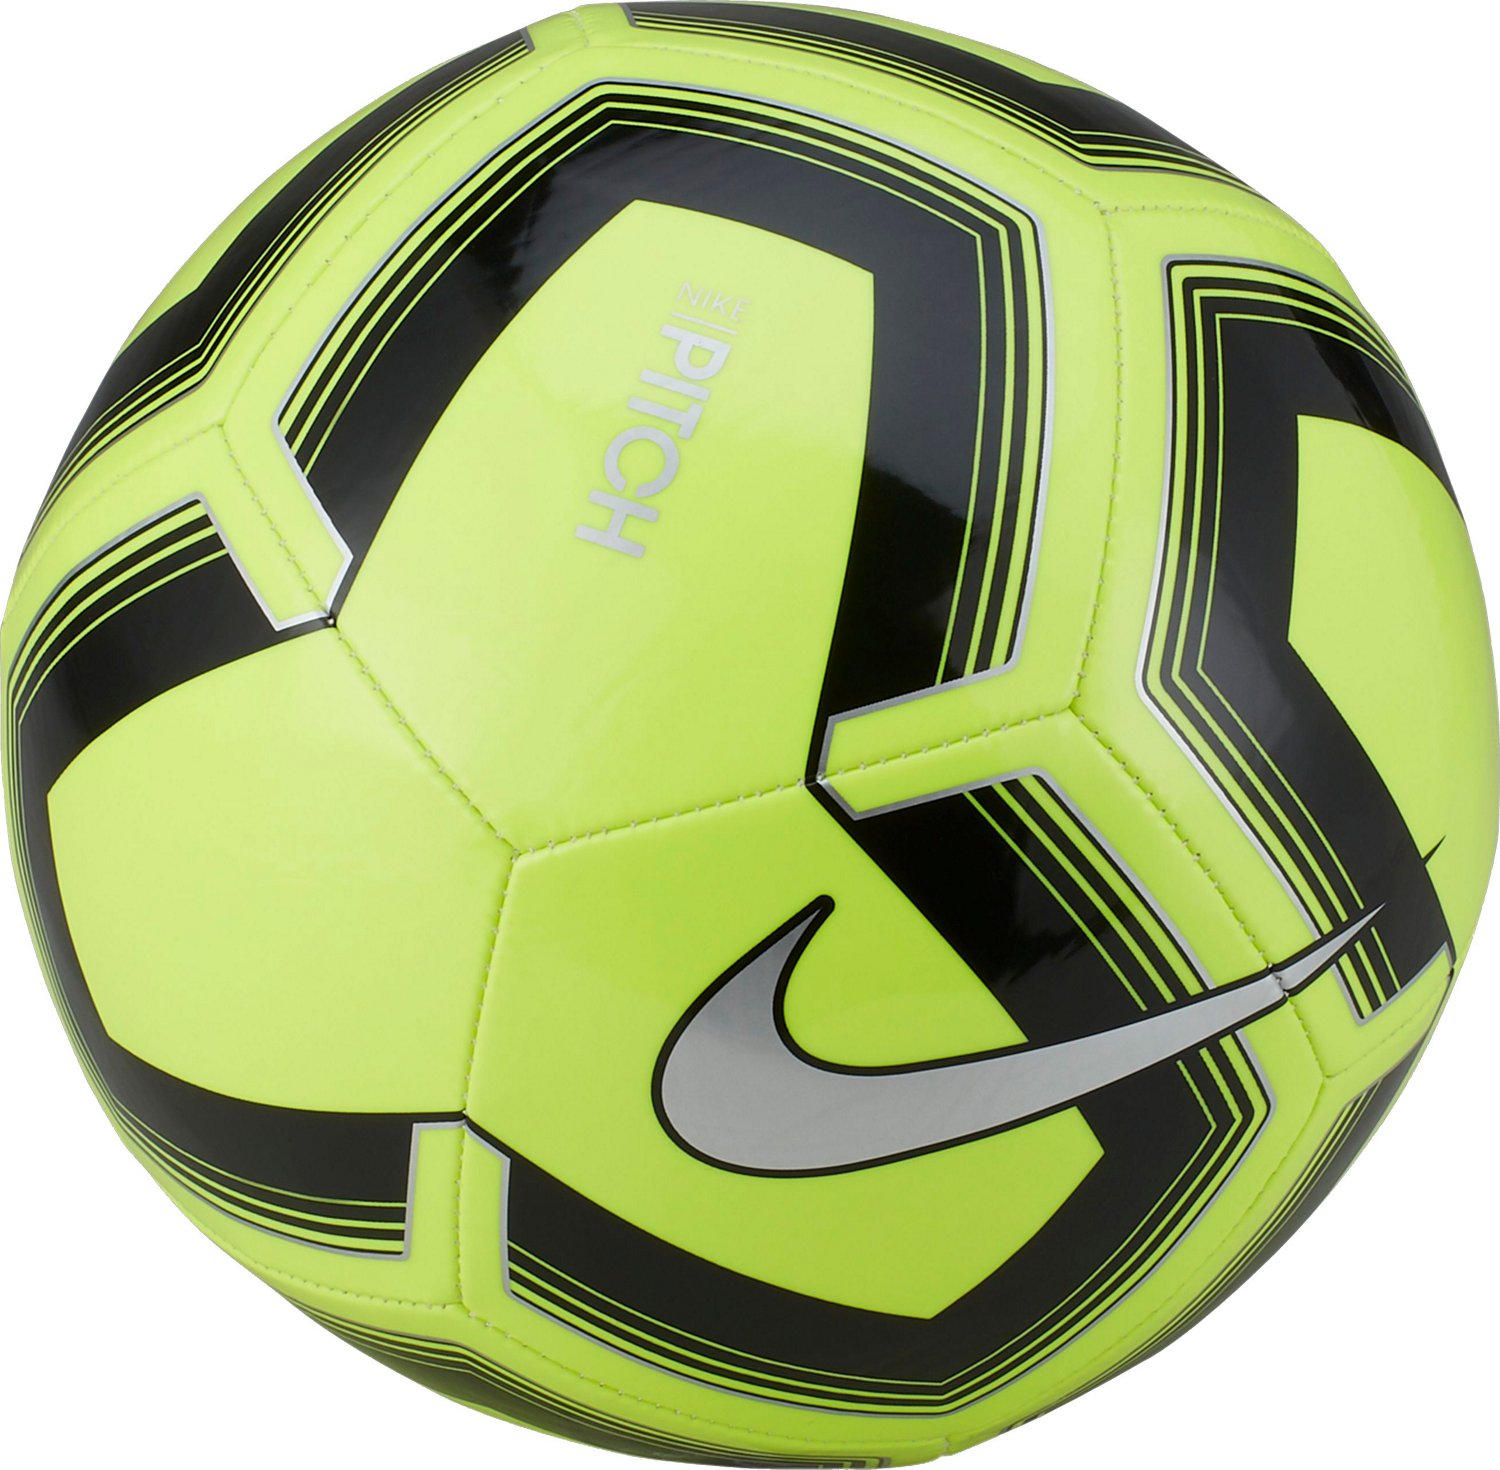 Mirar fijamente microscópico puerta Nike Pitch Training Soccer Ball | Academy